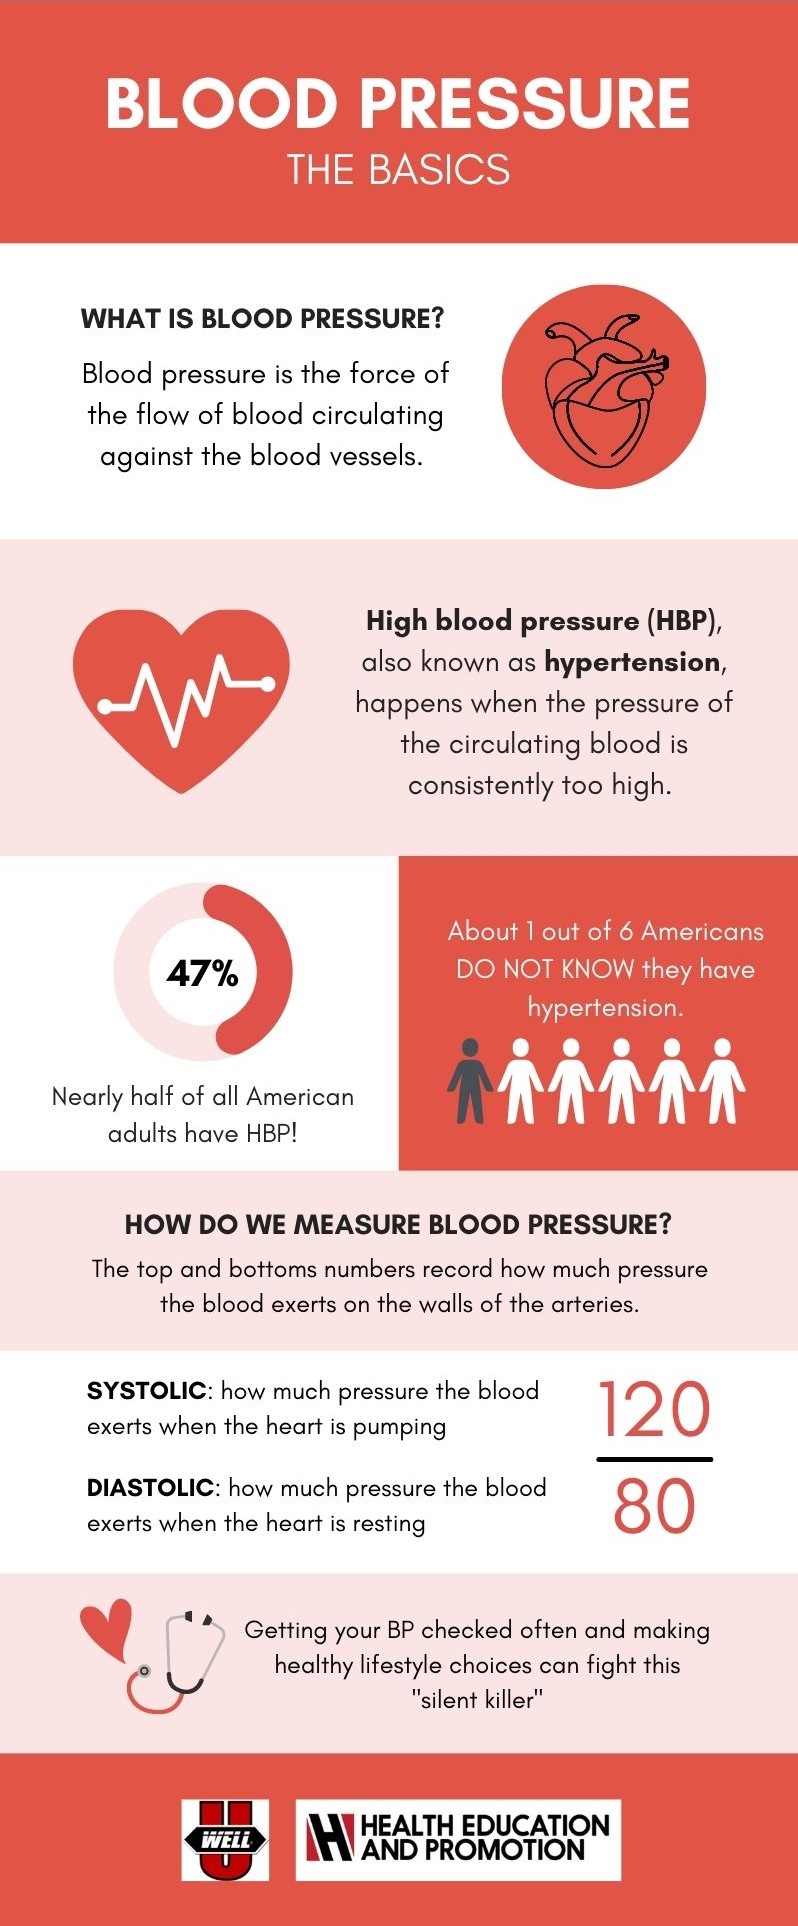 https://www.wku.edu/crw/hep/health-topics/images/blood-pressure-banner.jpg